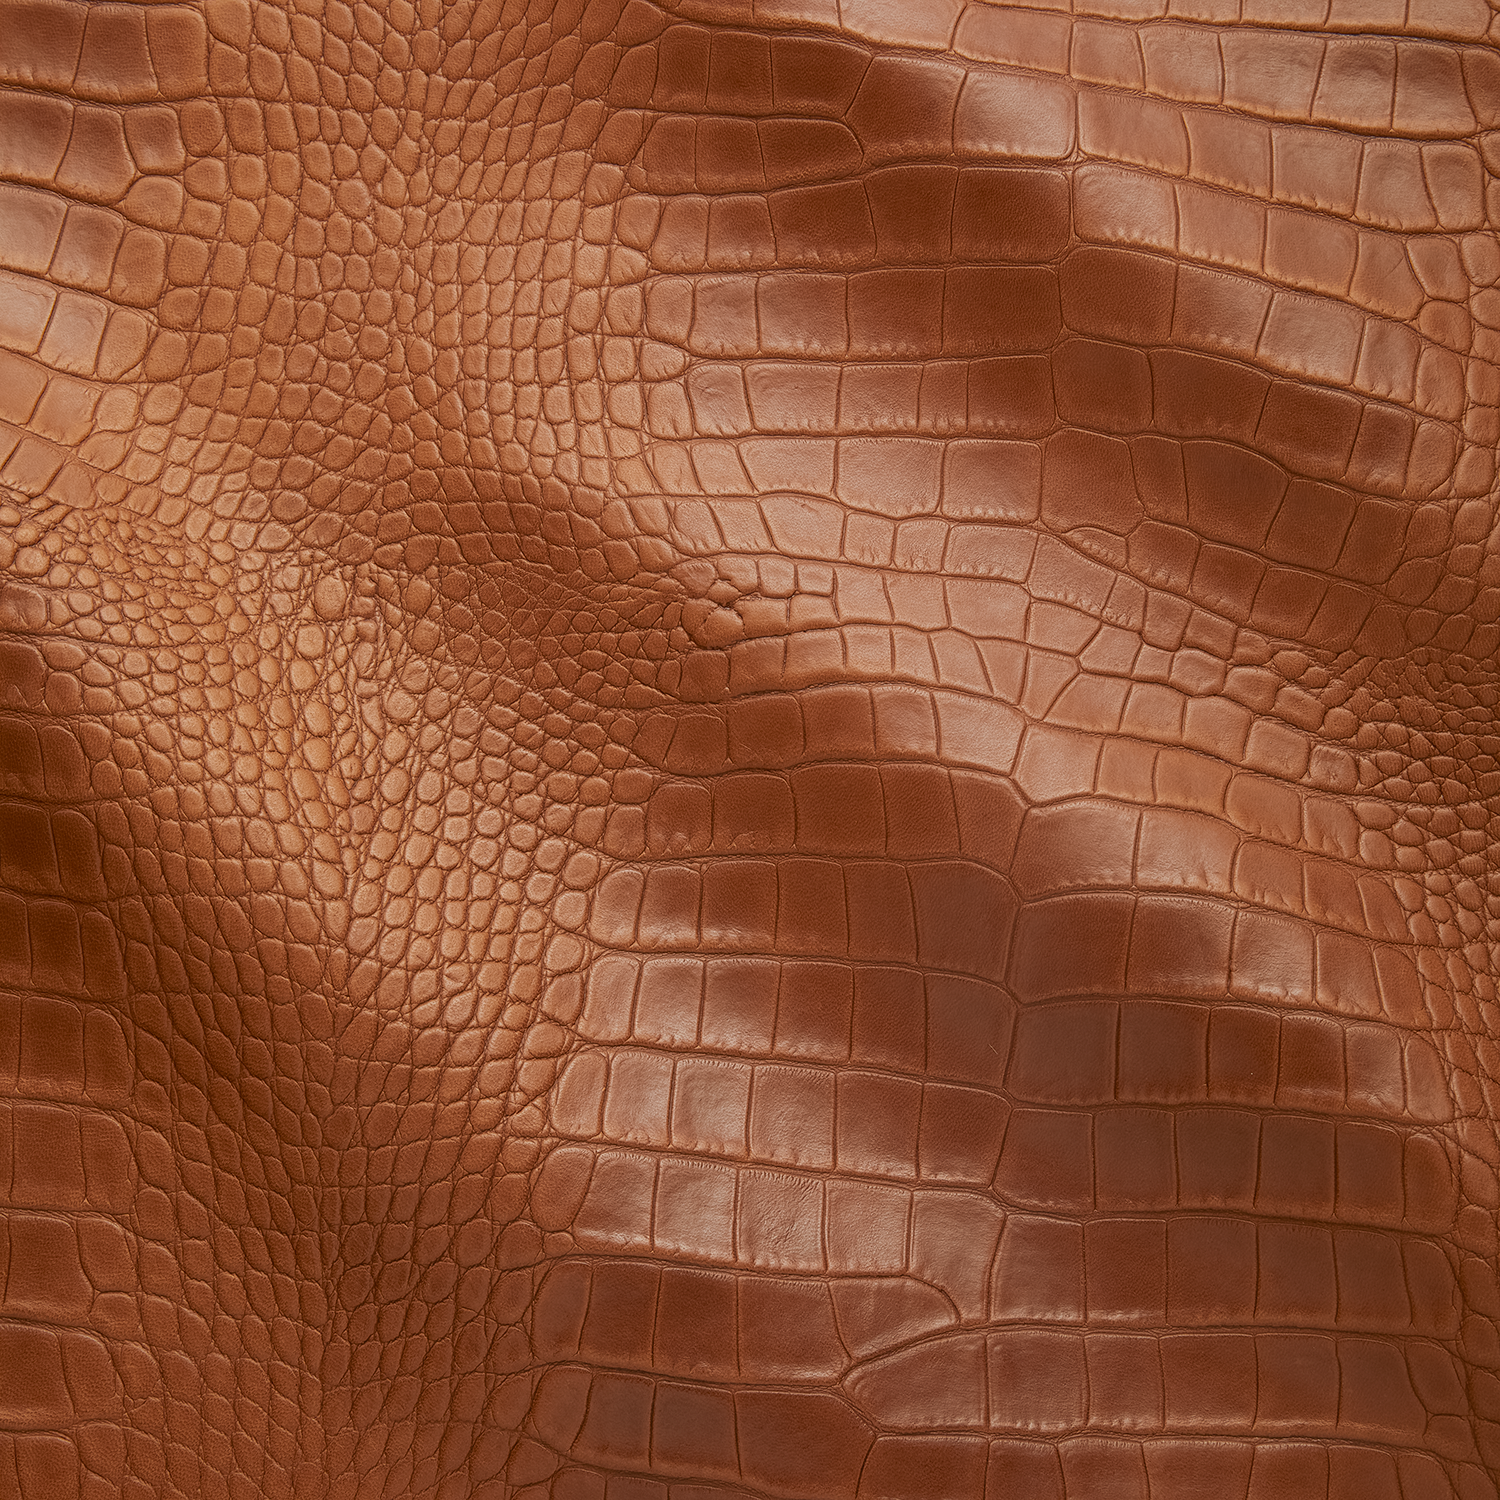 leathery skin texture